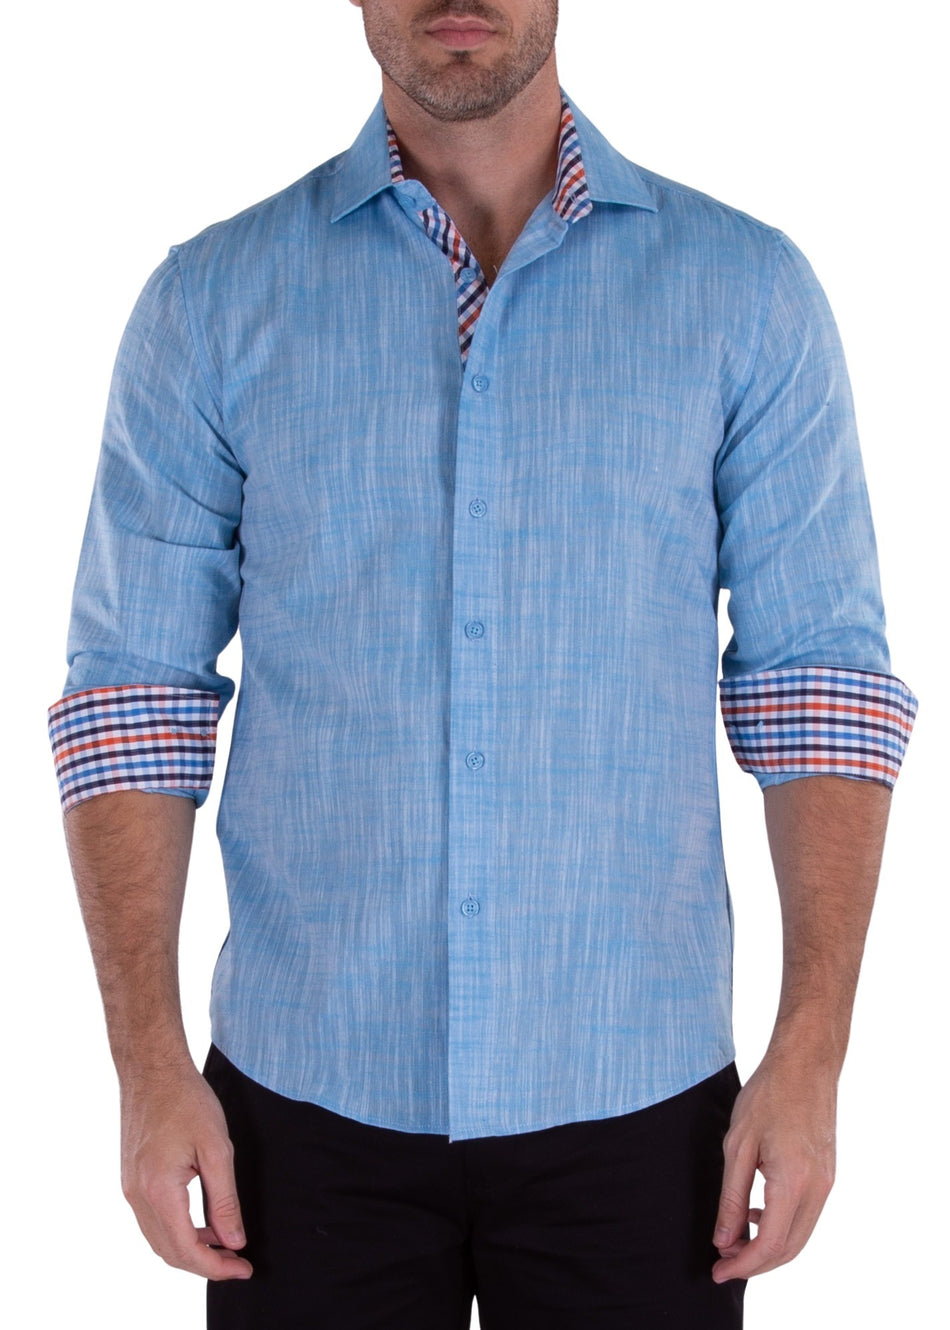 202238 - Men's Turquoise Button Up Long Sleeve Dress Shirt